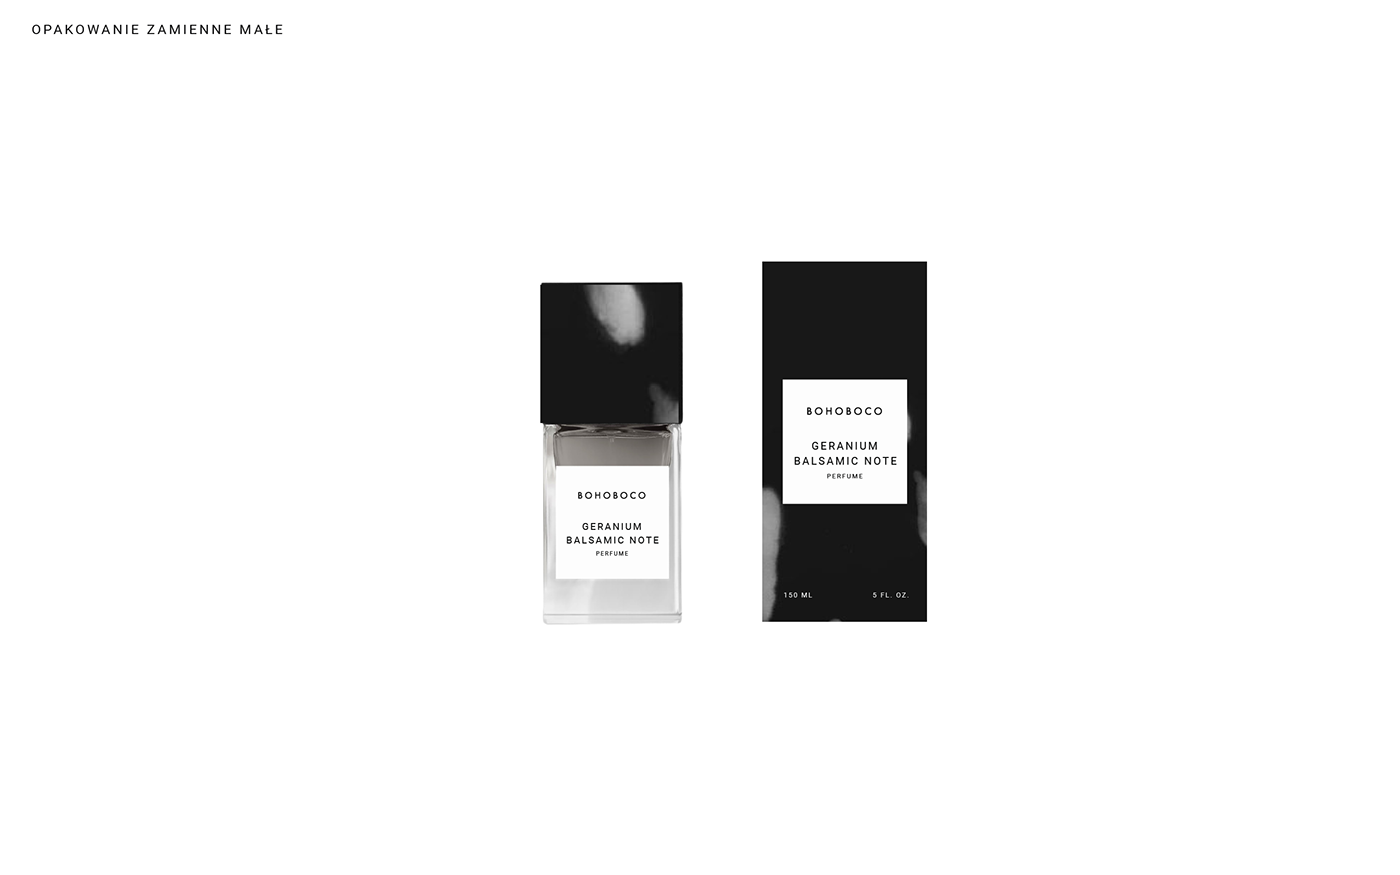 bohoboco perfume Packaging product design  brand identity Graphic Designer black handprint